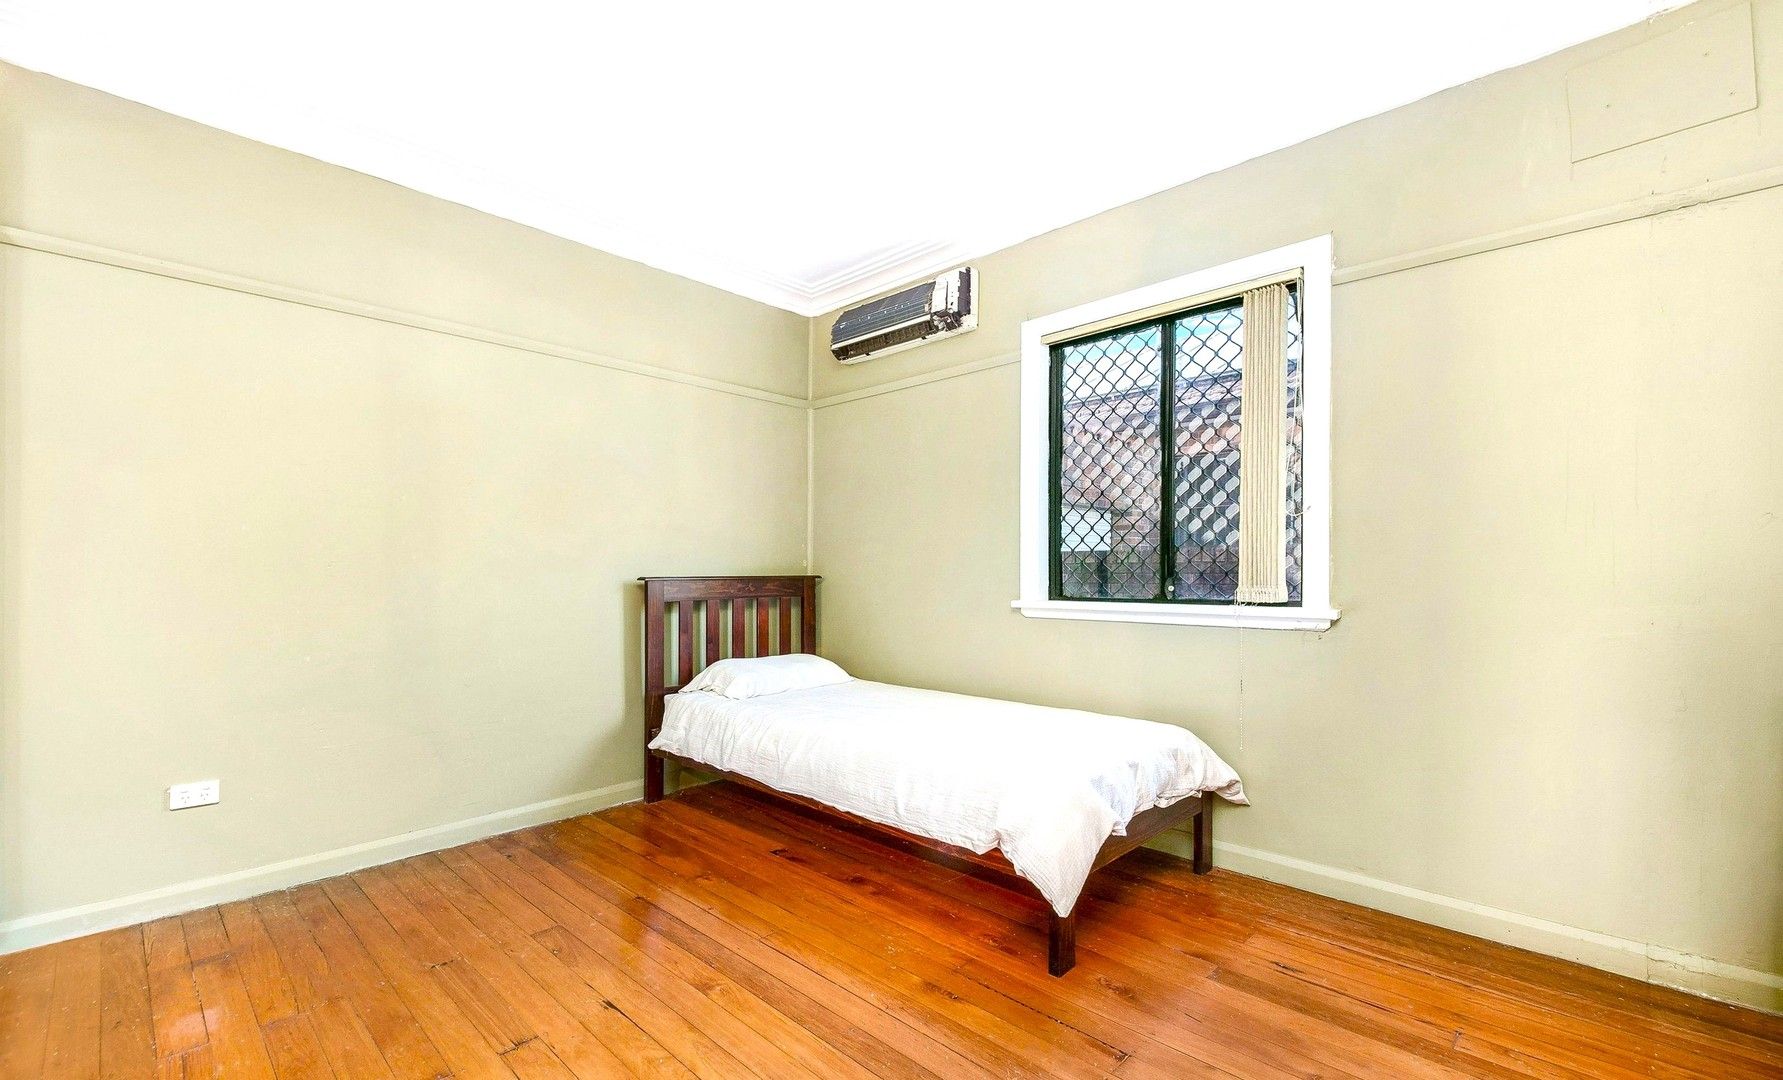 3 bedrooms House in 137 Greenacre Road GREENACRE NSW, 2190